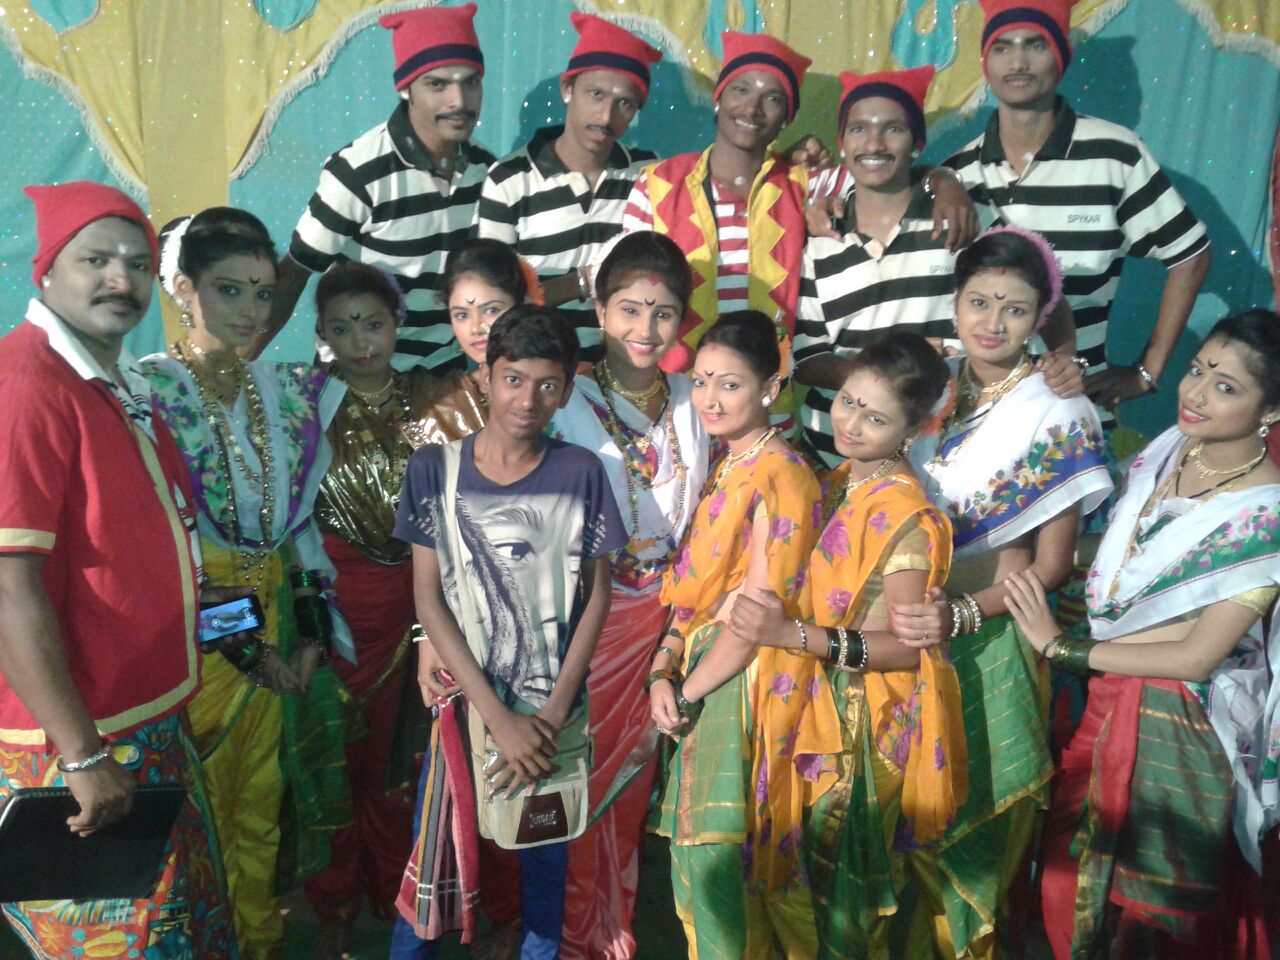 Koli dance during Nabarangpur Mondei festival 2014 at Odisha